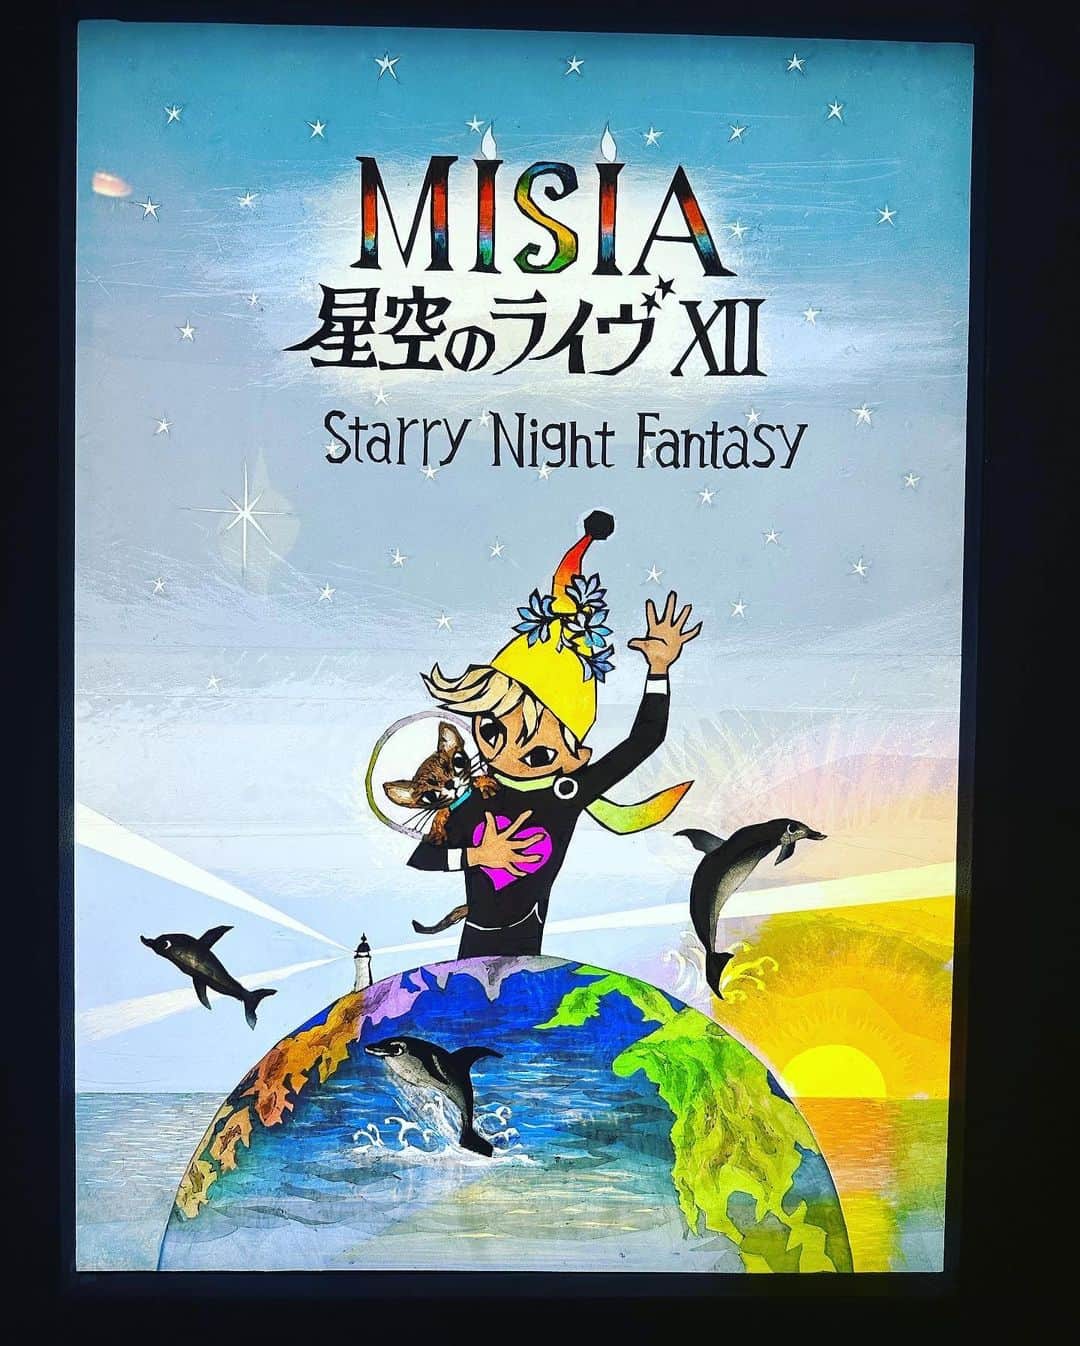 MISIAのインスタグラム：「MISIA  星空のライブXII Starry Night Fantasy  2023年11月から、 MISIAの人気ライヴシリーズ「MISIA 星空のライヴⅫ Starry Night Fantasy」の全国アリーナツアーの開催が決定しました！ チケット先行抽選受付中！  ＜公演スケジュール＞ – 2023年 – ★ 11月11日（土）  静岡／エコパアリーナ　 ★ 11月12日（日）  静岡／エコパアリーナ  ★ 11月22日（水）  埼玉／さいたまスーパーアリーナ　 ★ 11月23日（祝・木）  埼玉／さいたまスーパーアリーナ　  ★ 12月2日（土）  北海道／真駒内セキスイハイムアイスアリーナ　　 ★ 12月3日（日）  北海道／真駒内セキスイハイムアイスアリーナ　　  ★ 12月16日（土）  宮城／宮城・セキスイハイムスーパーアリーナ　　 ★ 12月17日（日）  宮城／宮城・セキスイハイムスーパーアリーナ　　  – 2024年 – ★ 1月7日（日）  大阪／大阪城ホール　　 ★ 1月8日（祝・月）  大阪／大阪城ホール　　  ★ 1月20日（土）  福井／サンドーム福井　　 ★ 1月21日（日）  福井／サンドーム福井　　  ★ 1月27日（土）  福岡／マリンメッセ福岡A館　　 ★ 1月28日（日）  福岡／マリンメッセ福岡A館　　  ★ 2月3日（土）  神奈川／横浜アリーナ　　 ★ 2月4日（日）  神奈川／横浜アリーナ　　  ★ 2月17日（土）  愛知／日本ガイシホール　　 ★ 2月18日（日）  愛知／日本ガイシホール　　  ★ 2月24日（土）  新潟／朱鷺メッセ　　 ★ 2月25日（日）  新潟／朱鷺メッセ　　  ＜協賛＞ 株式会社ヤクルト本社／株式会社湖池屋／スターツコーポレーション株式会社／ソニー株式会社／呉工業株式会社」